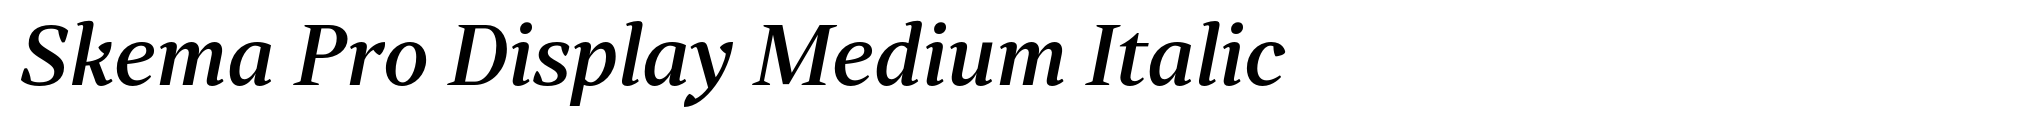 Skema Pro Display Medium Italic image